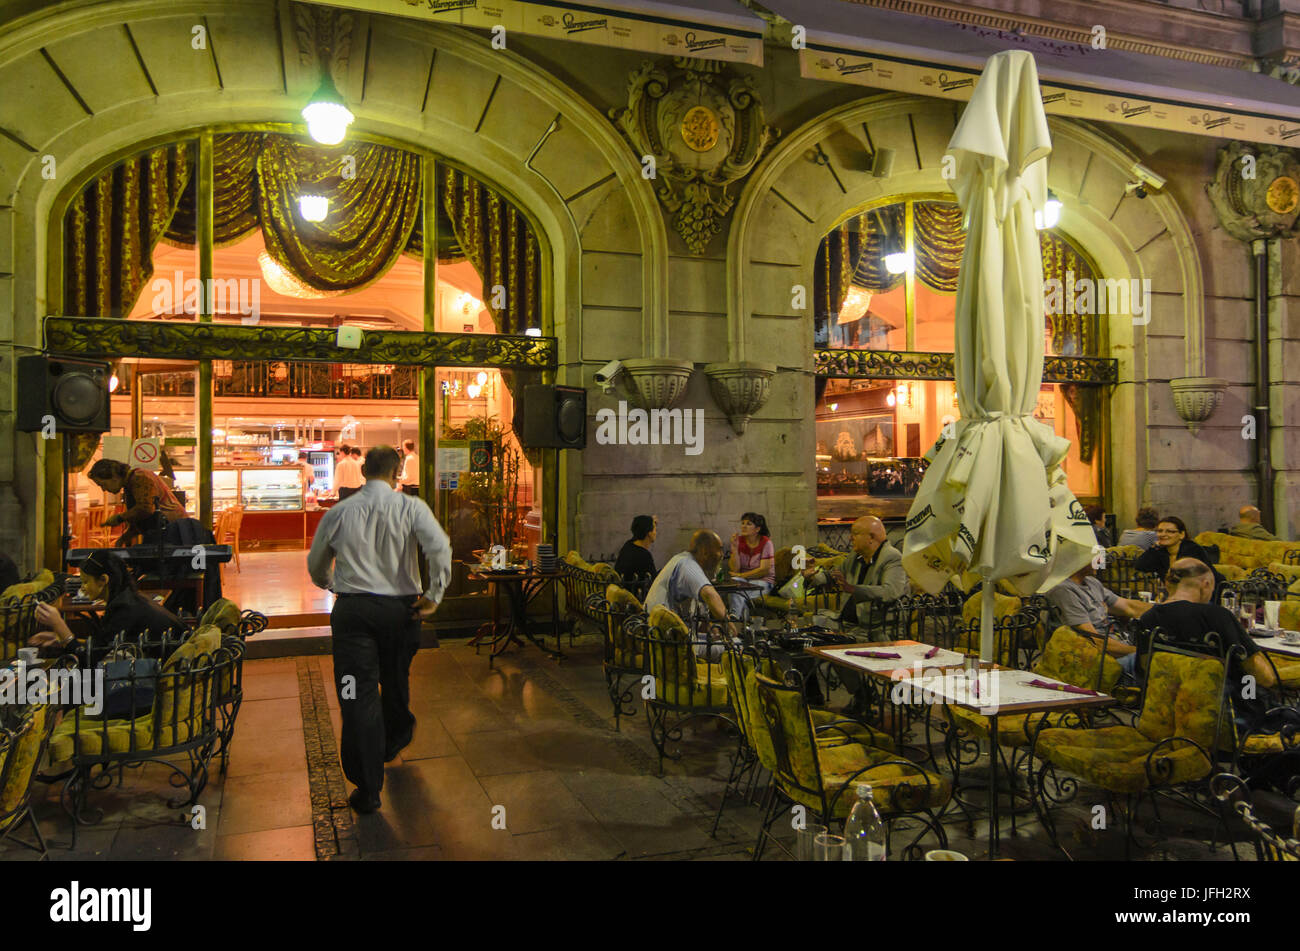 Restaurant at the square Trg Republike, Serbia, Belgrade Stock Photo